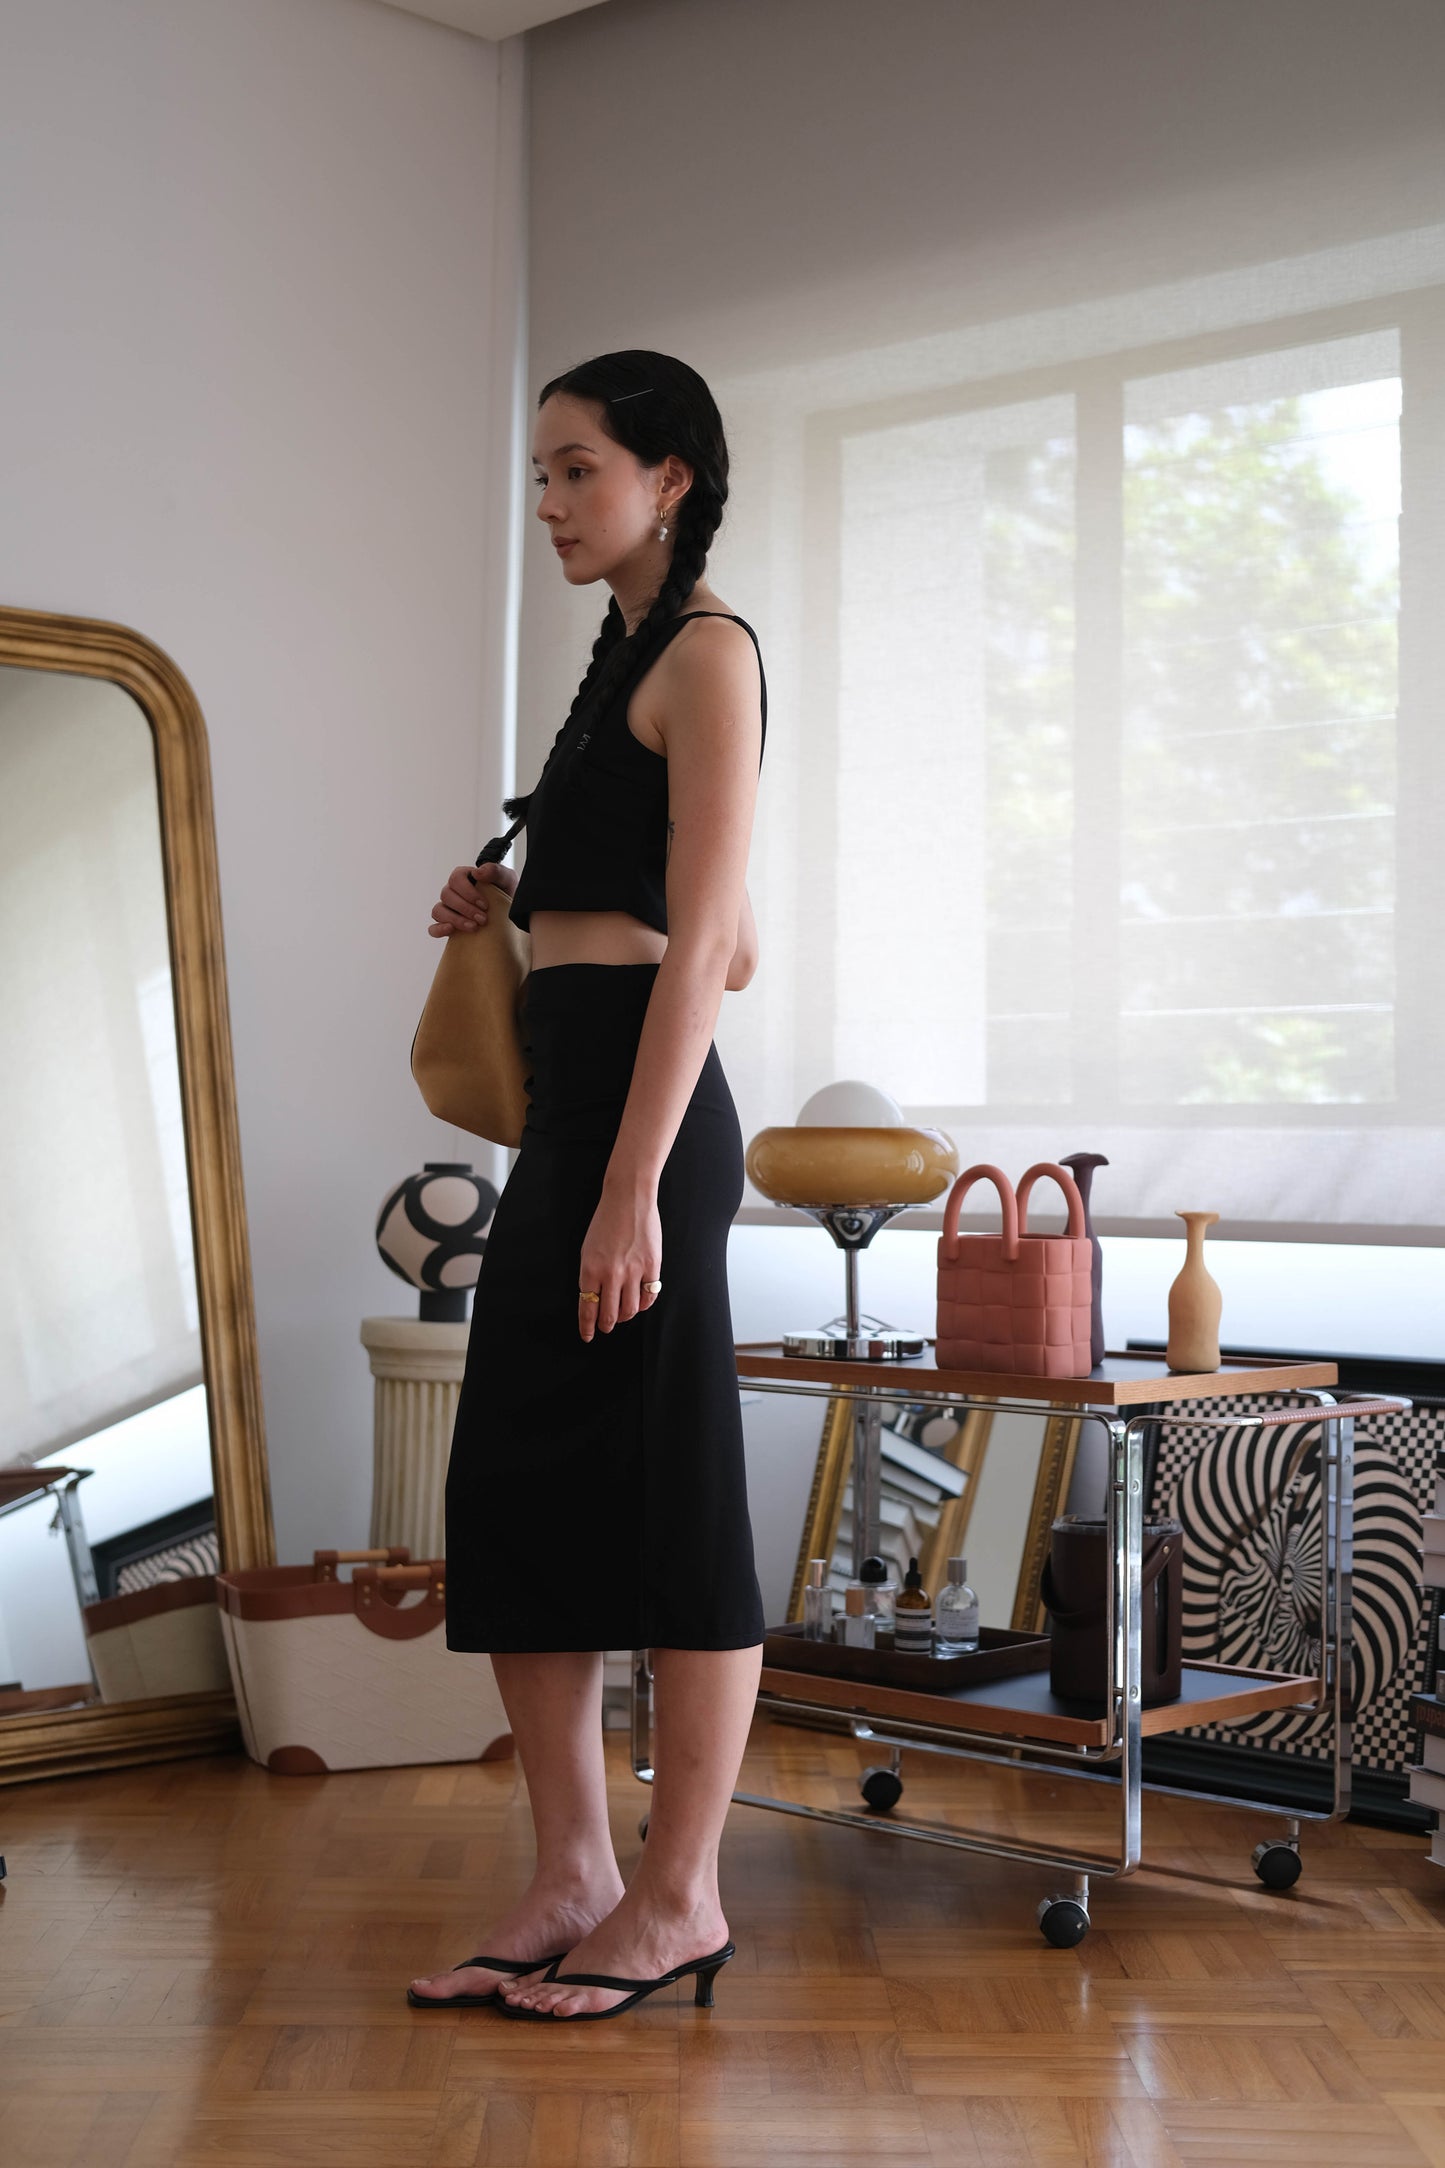 Sleeveless tank top + high waist split skirt in classic black